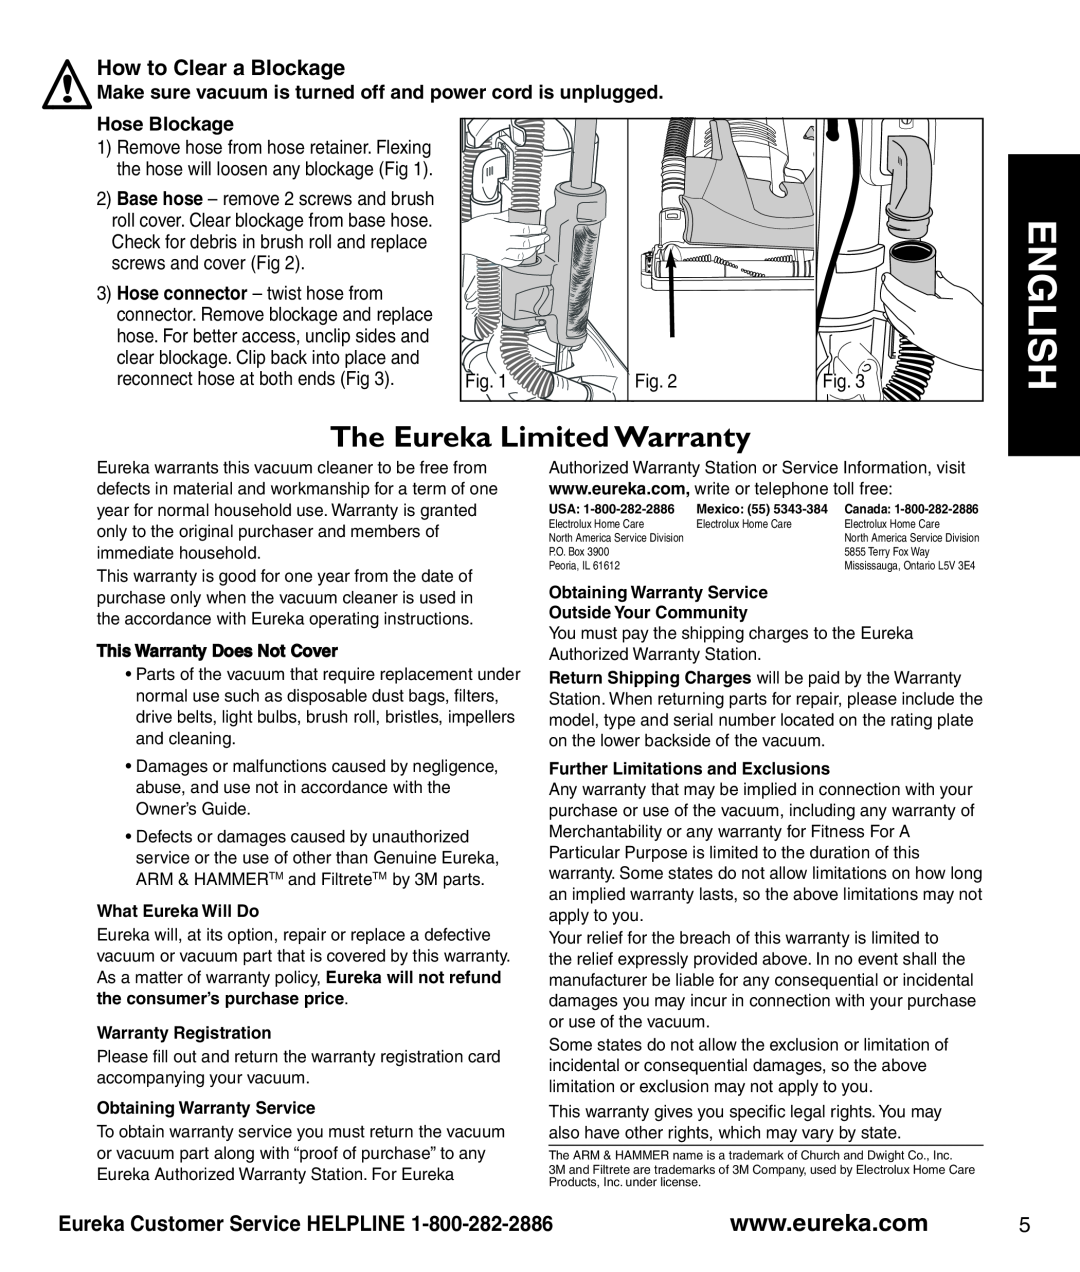 Eureka 3270 Series manual How to Clear a Blockage, Hose Blockage, English, The Eureka Limited Warranty, What Eureka Will Do 